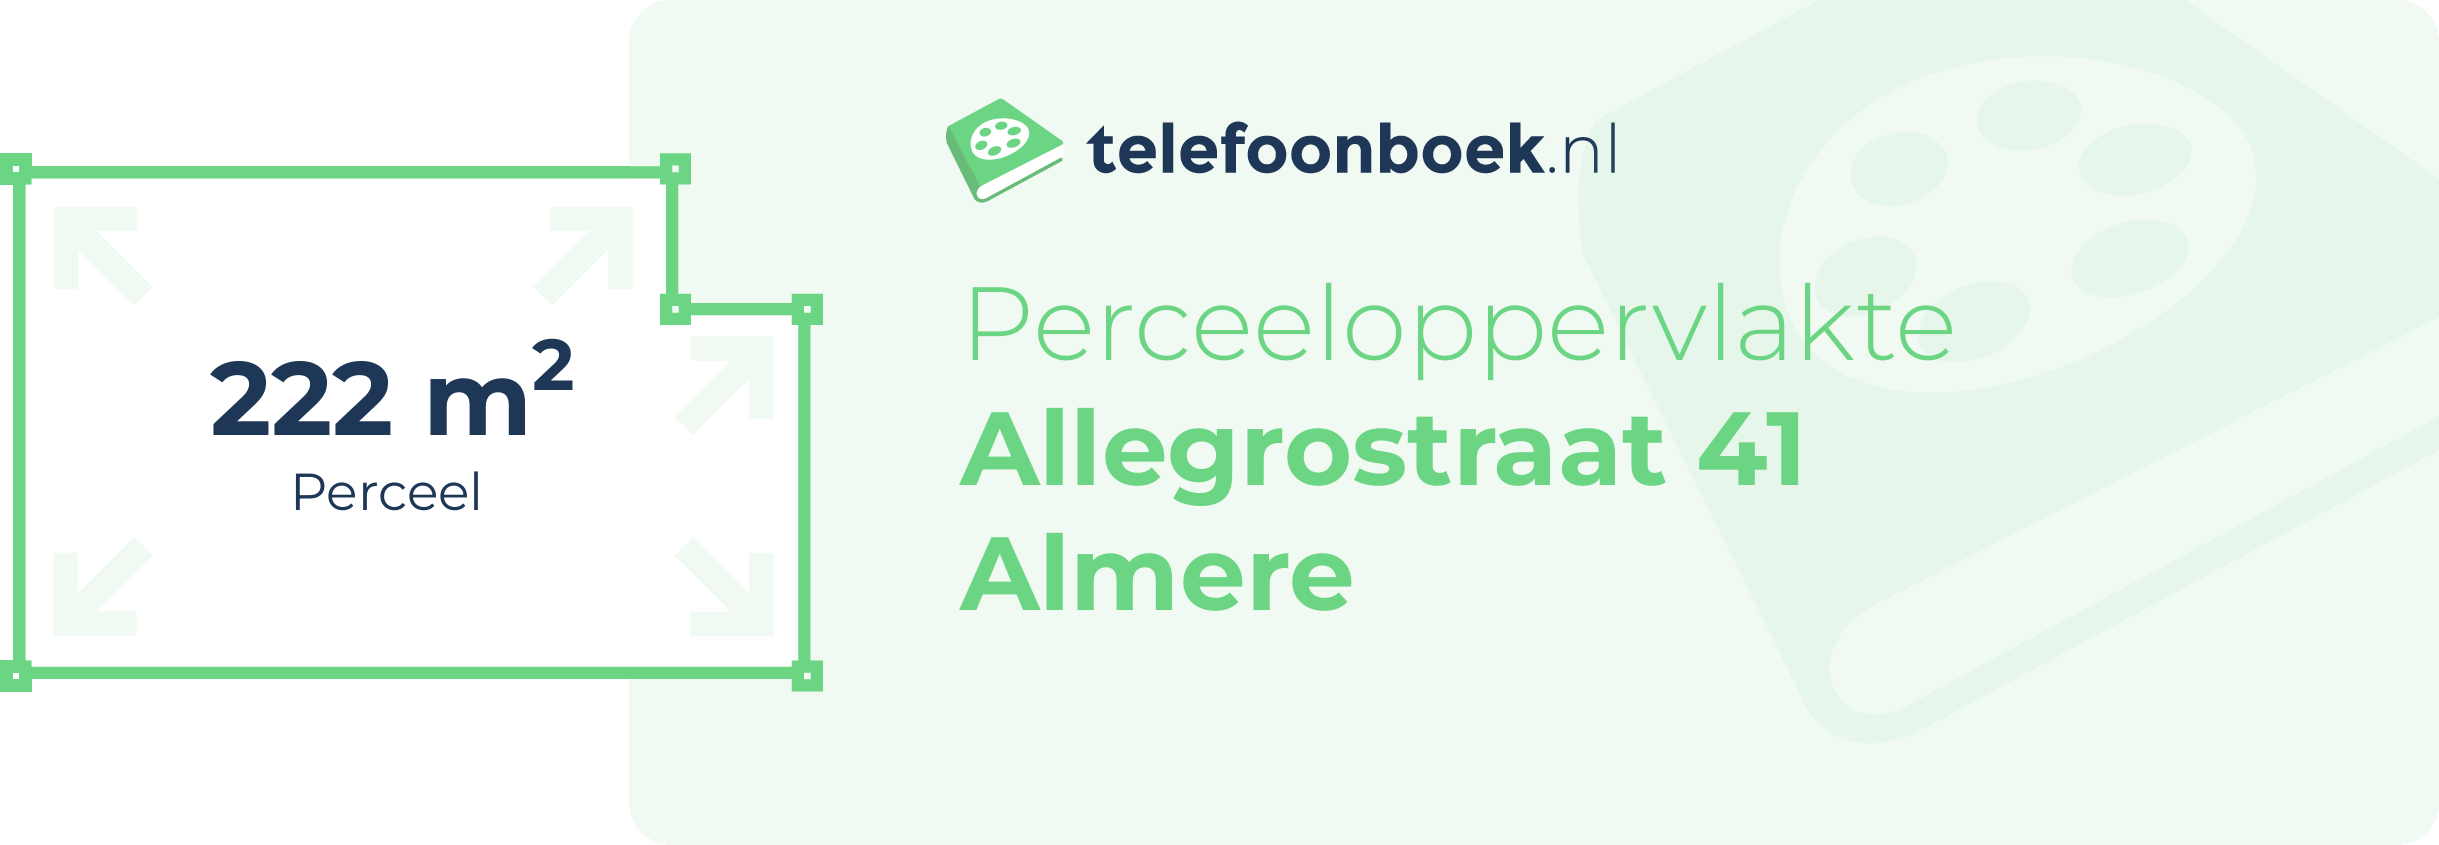 Perceeloppervlakte Allegrostraat 41 Almere